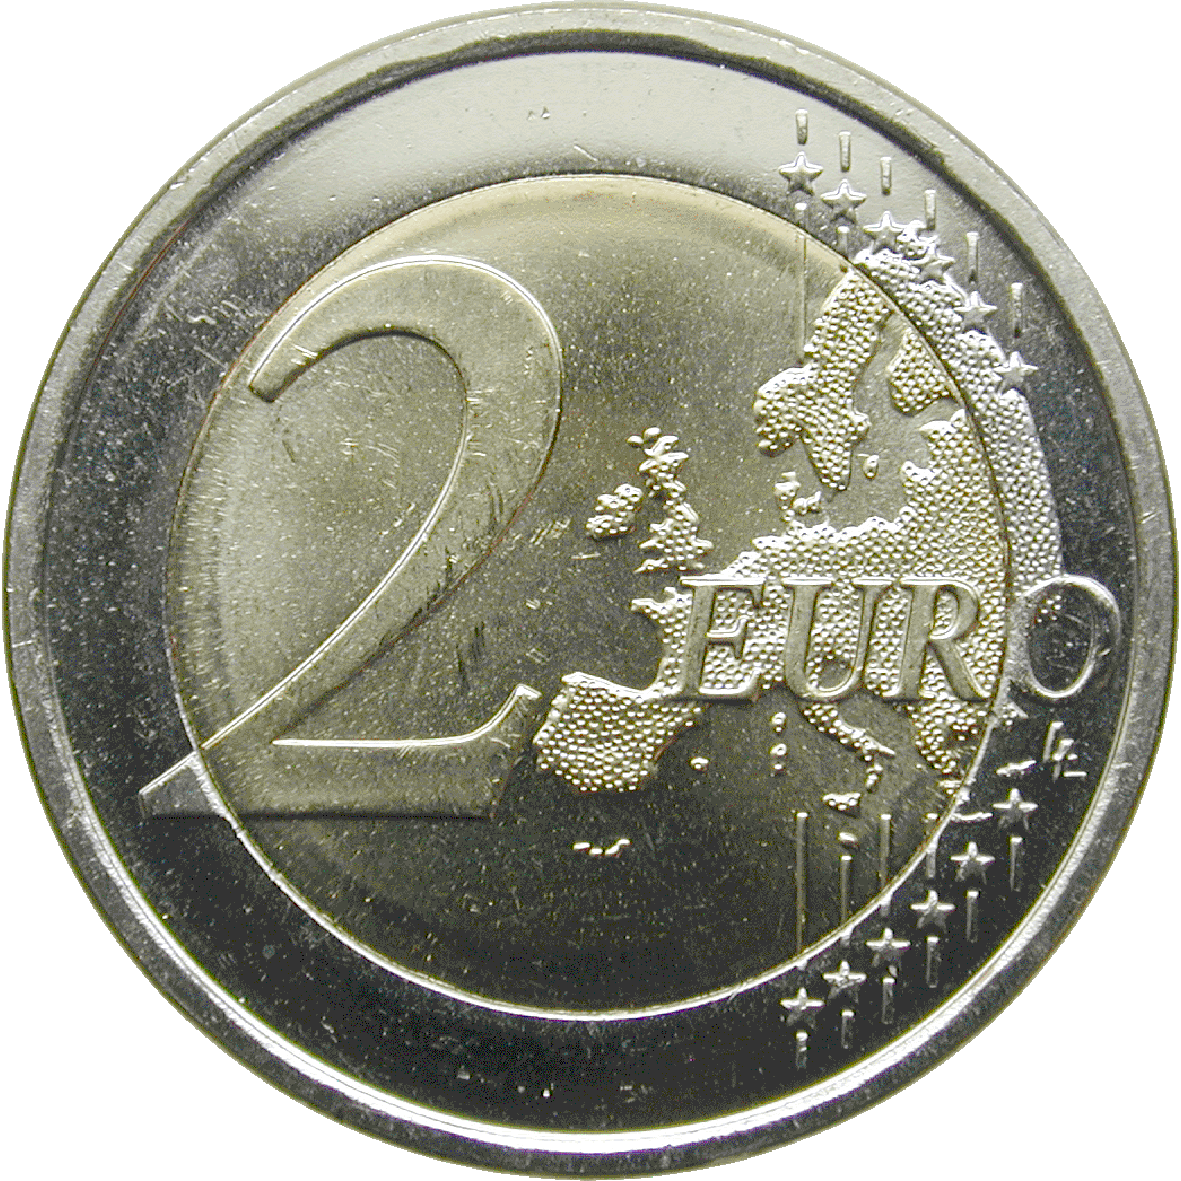 Republik Estland, 2 Euro 2011 (obverse)